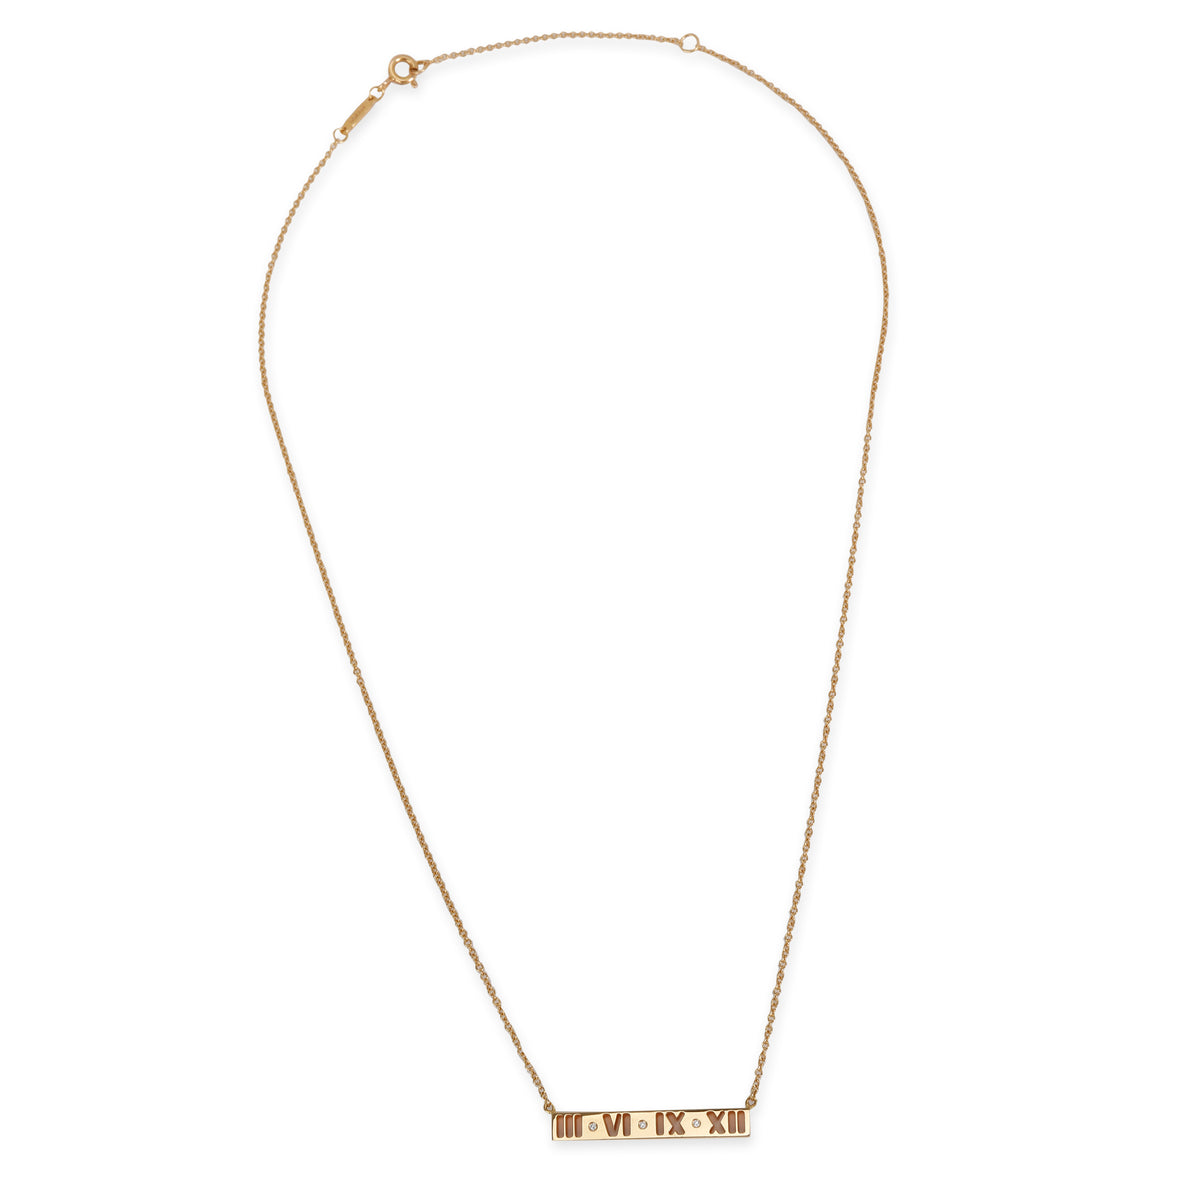 Tiffany & Co. Atlas Pierced Bar Diamond Pendant Necklace in 18KT Gold 0.01 CTW